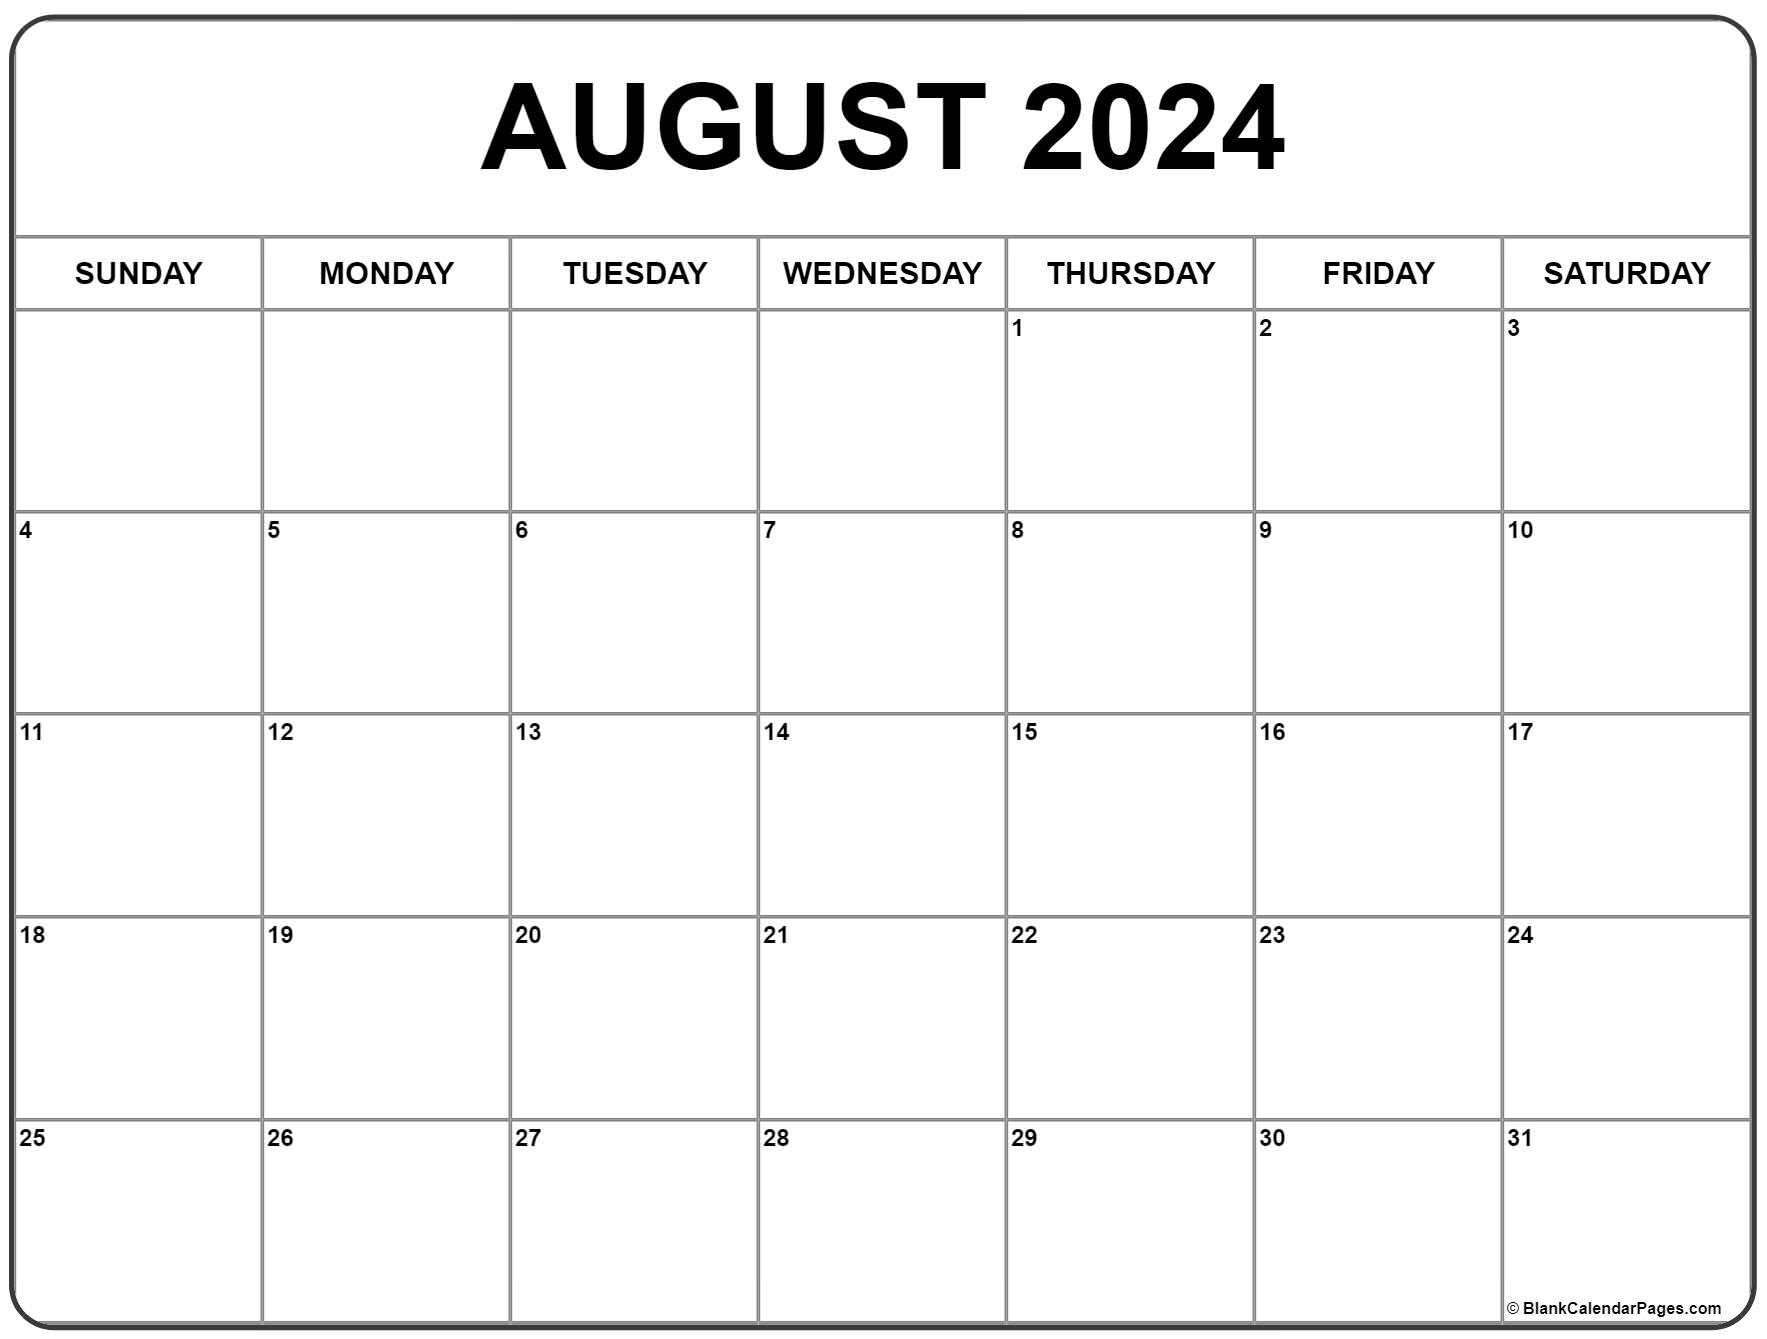 August 2024 Calendar | Free Printable Calendar for July August 2024 Calendar Printable